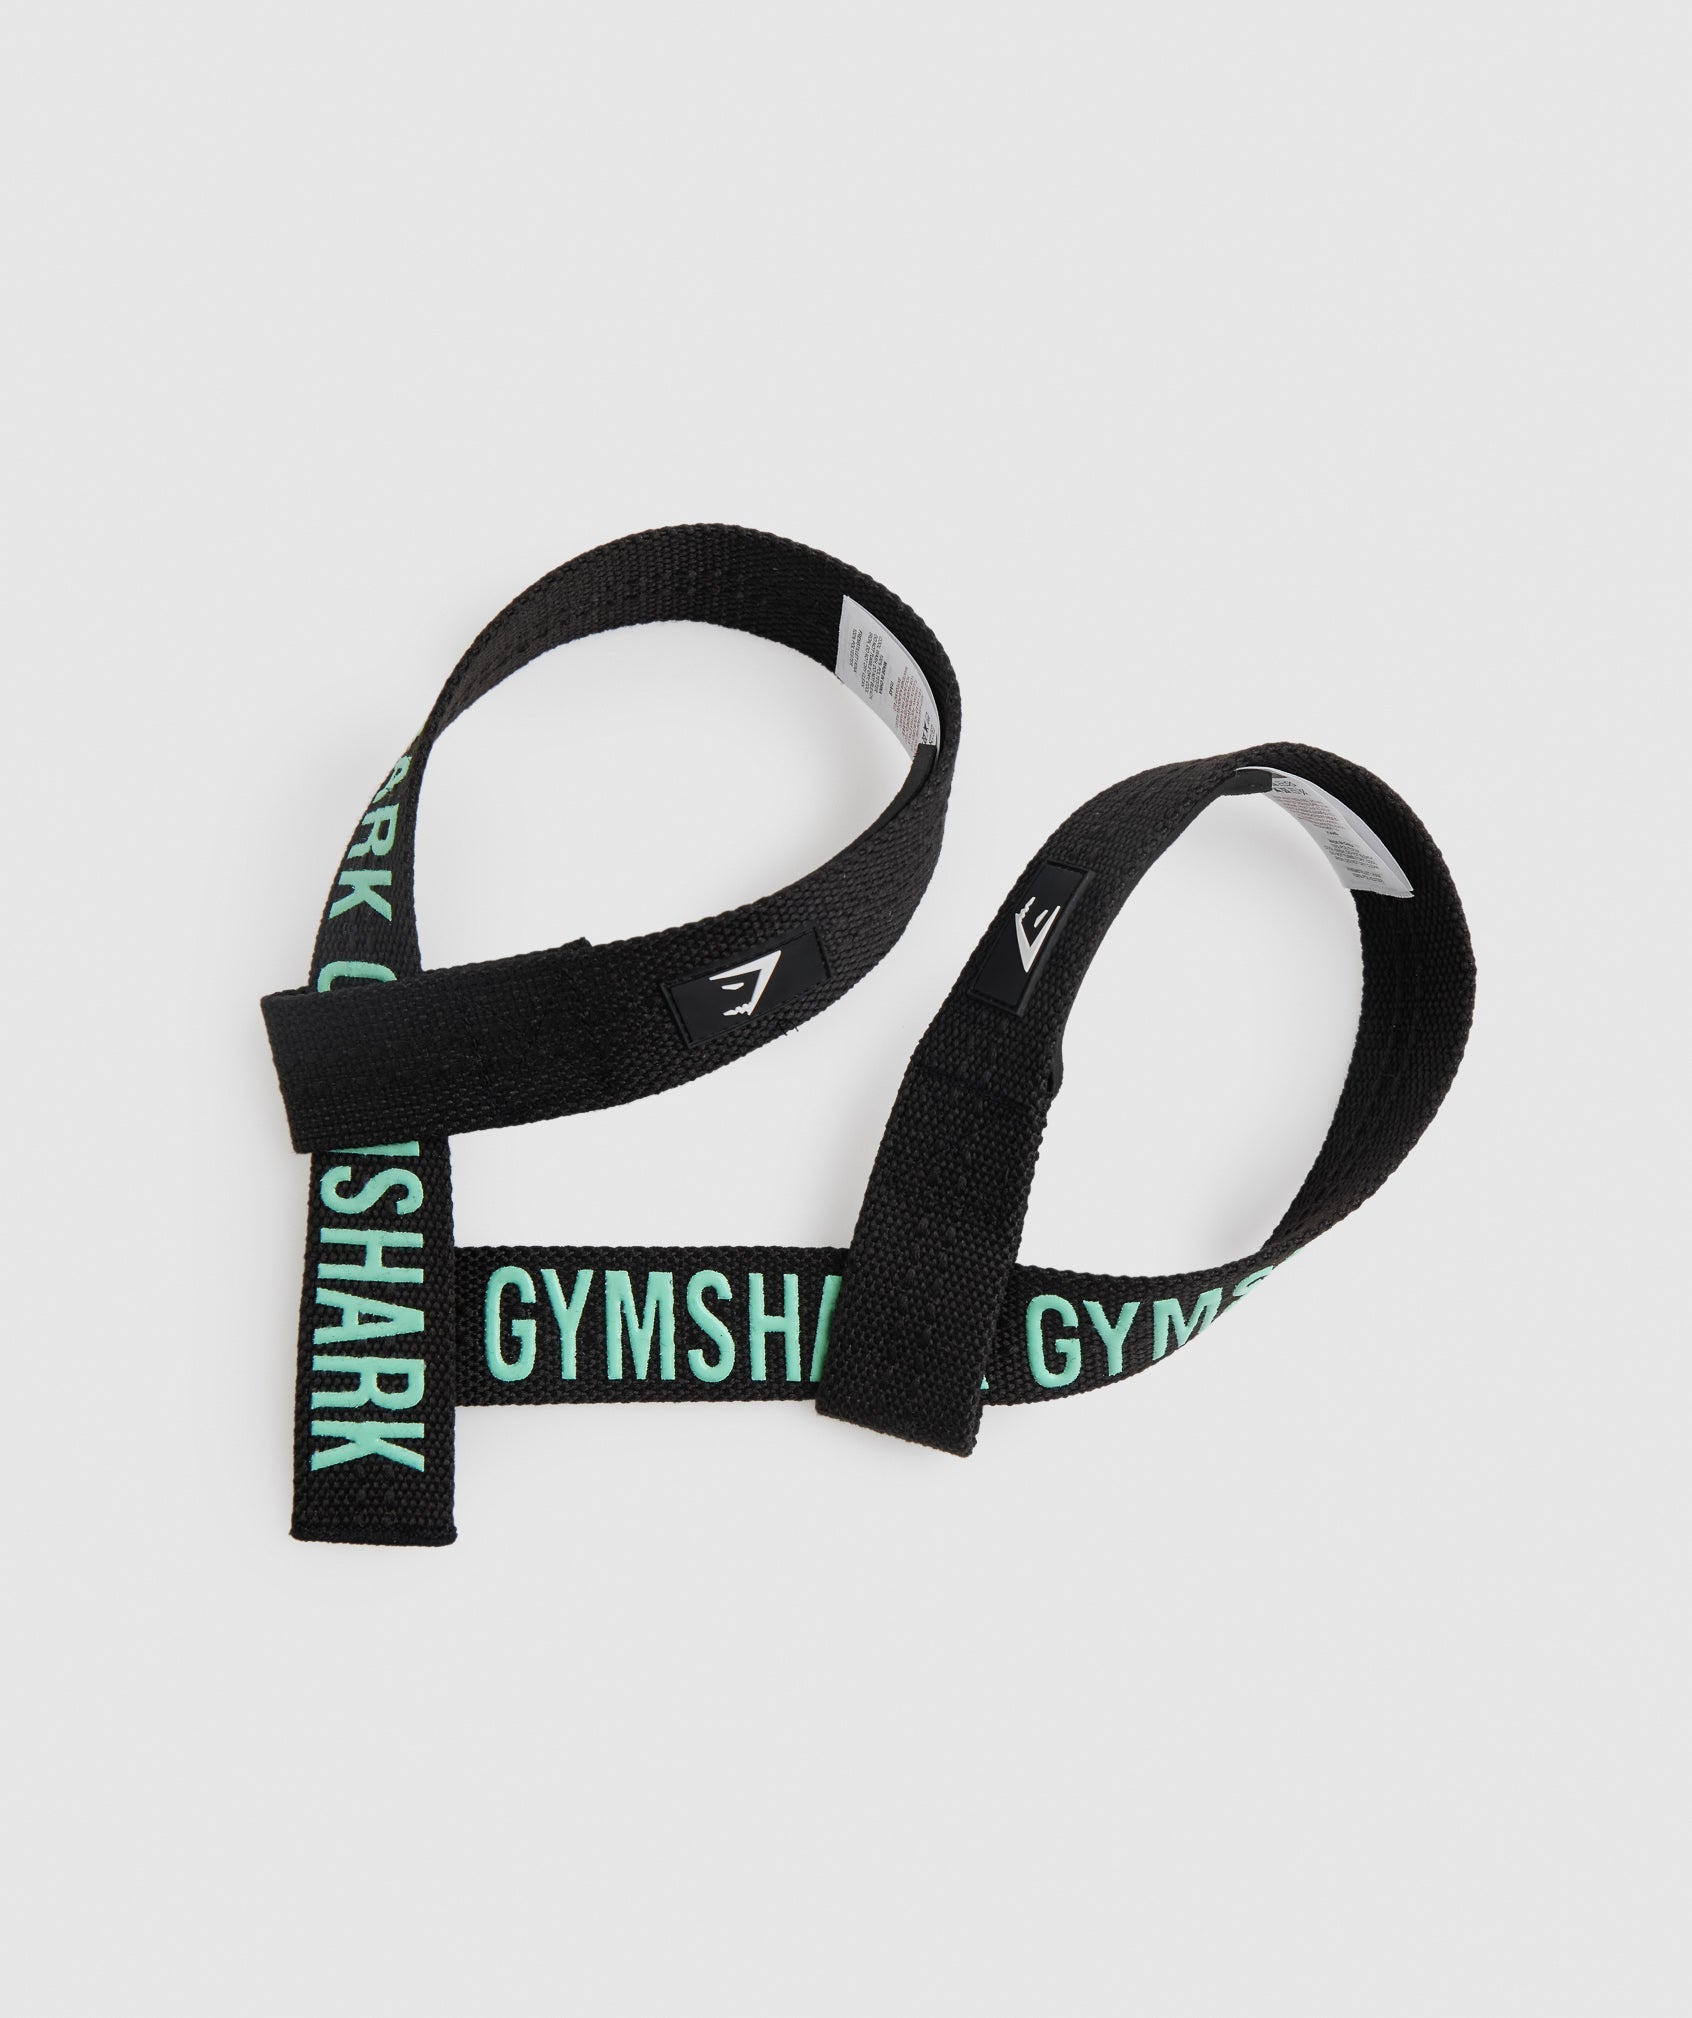 Gymshark Wrist Straps - Black